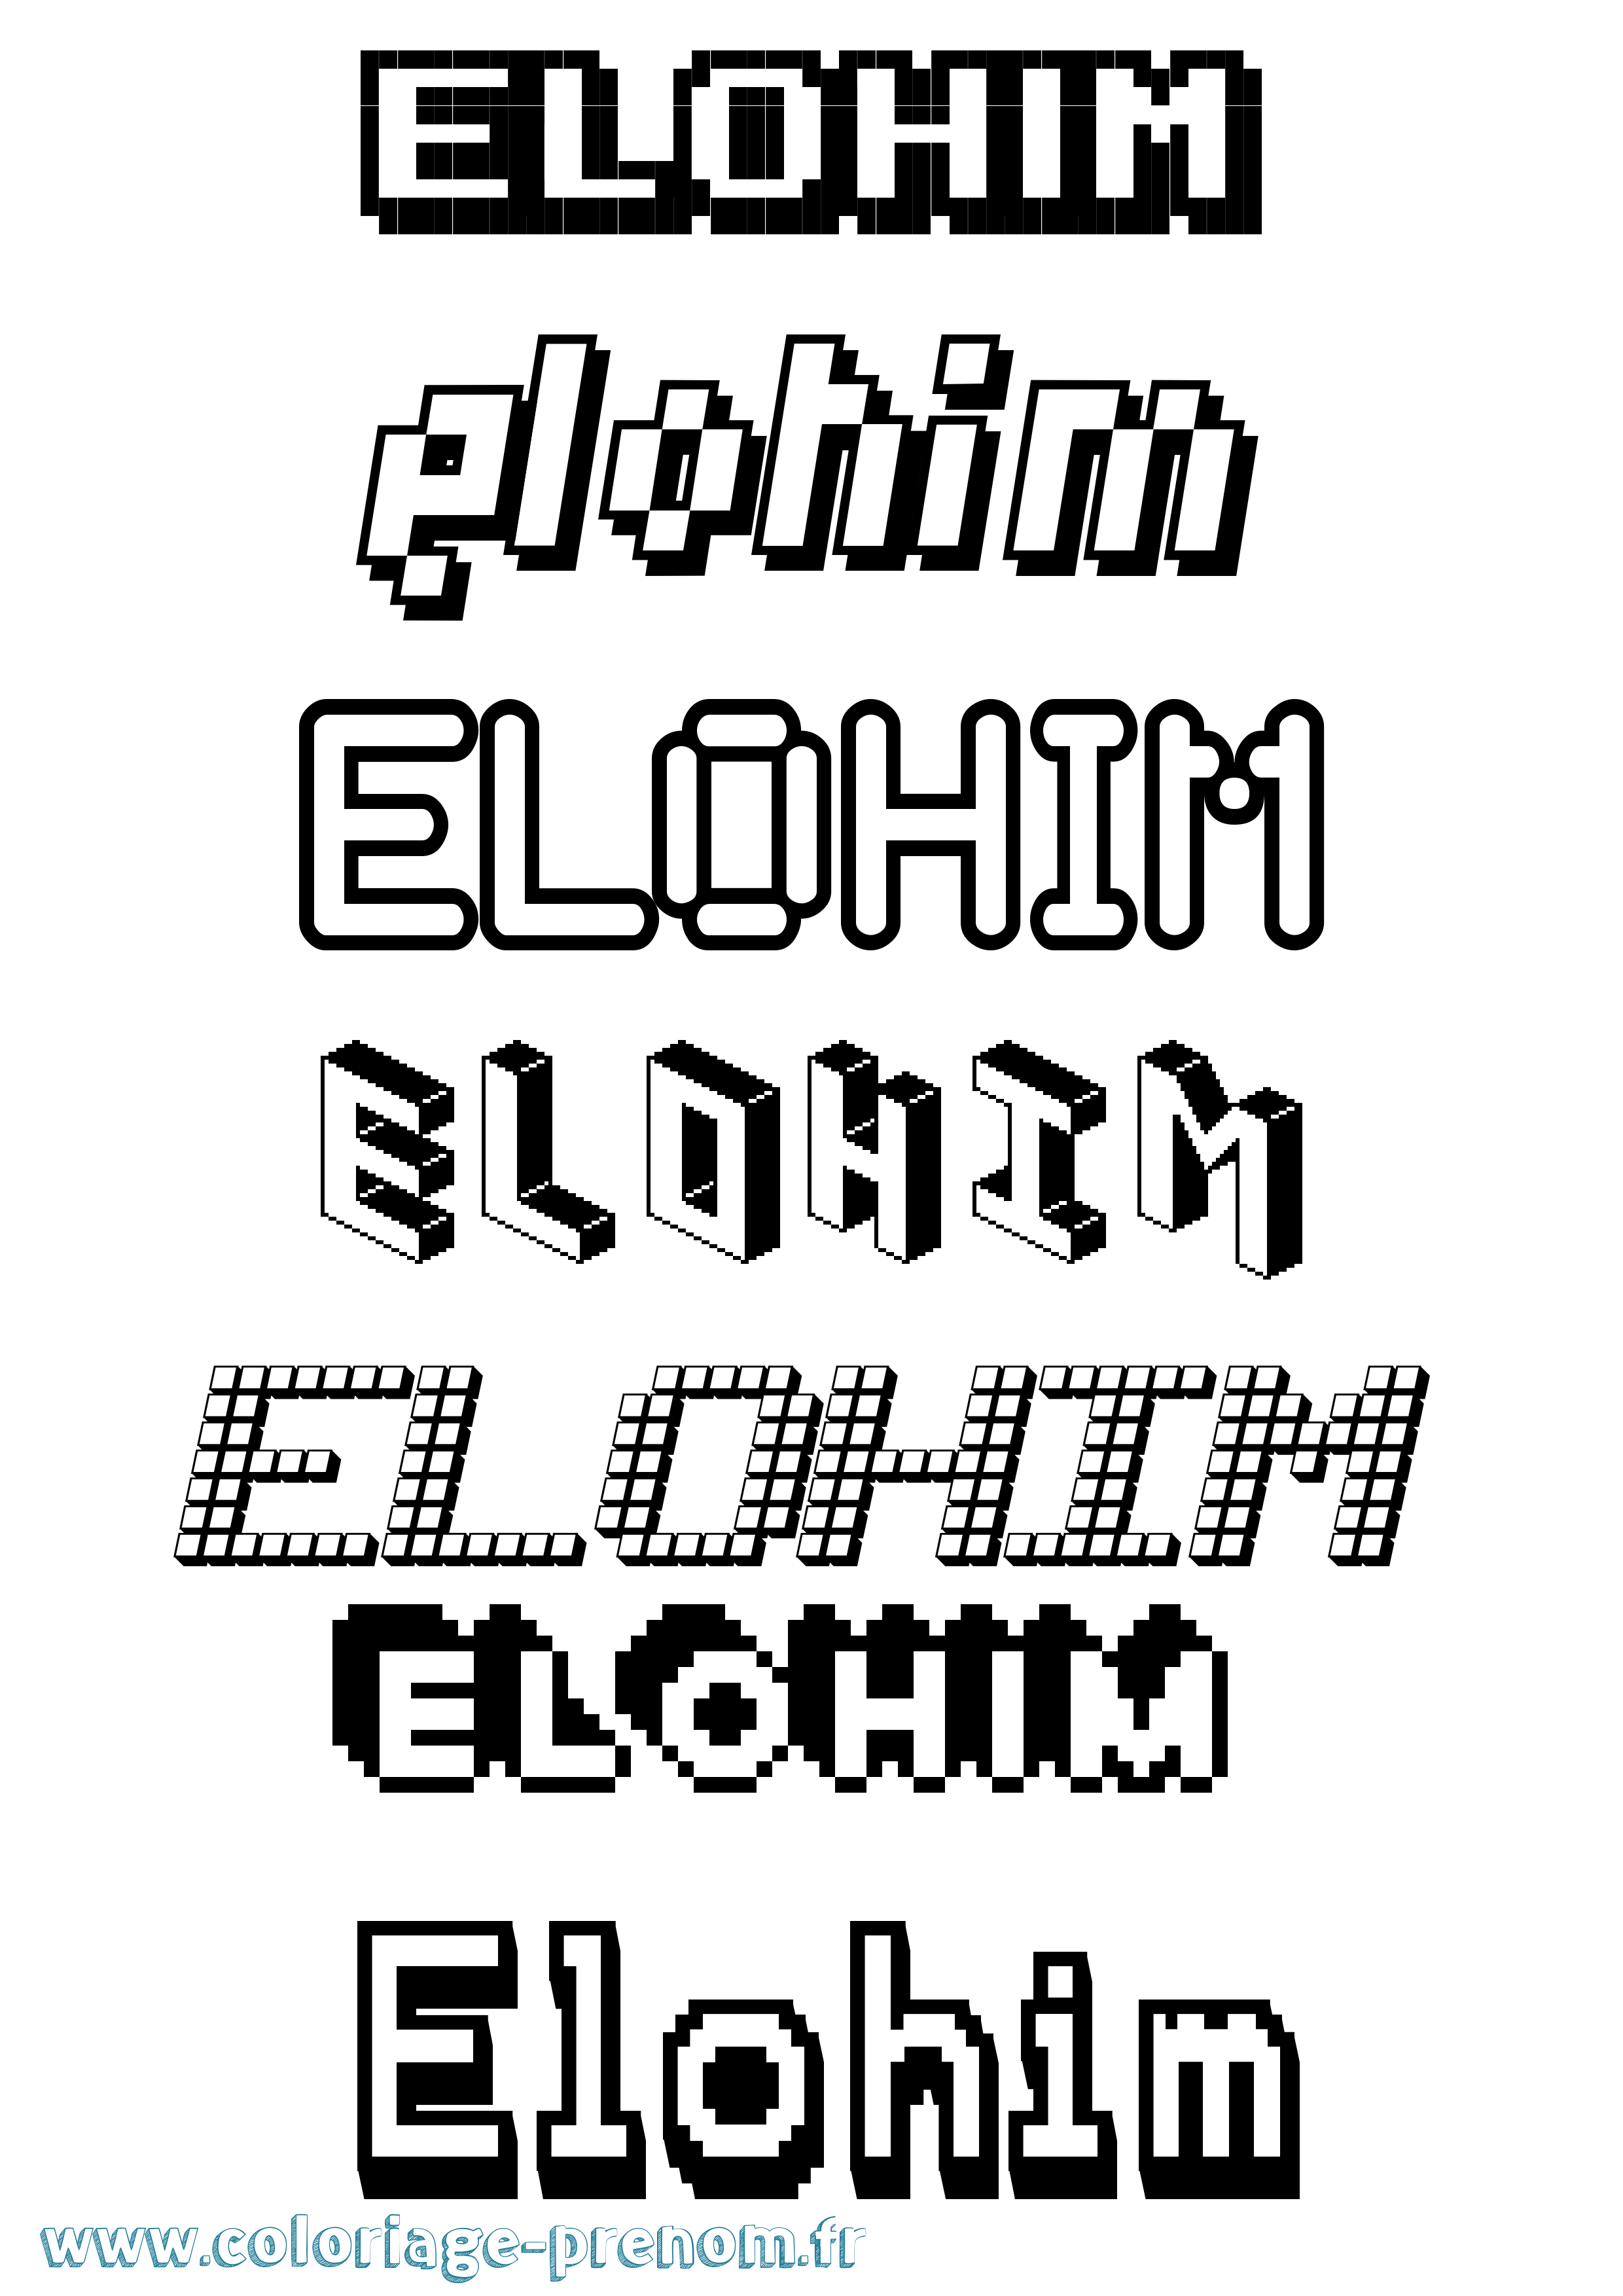 Coloriage prénom Elohim Pixel